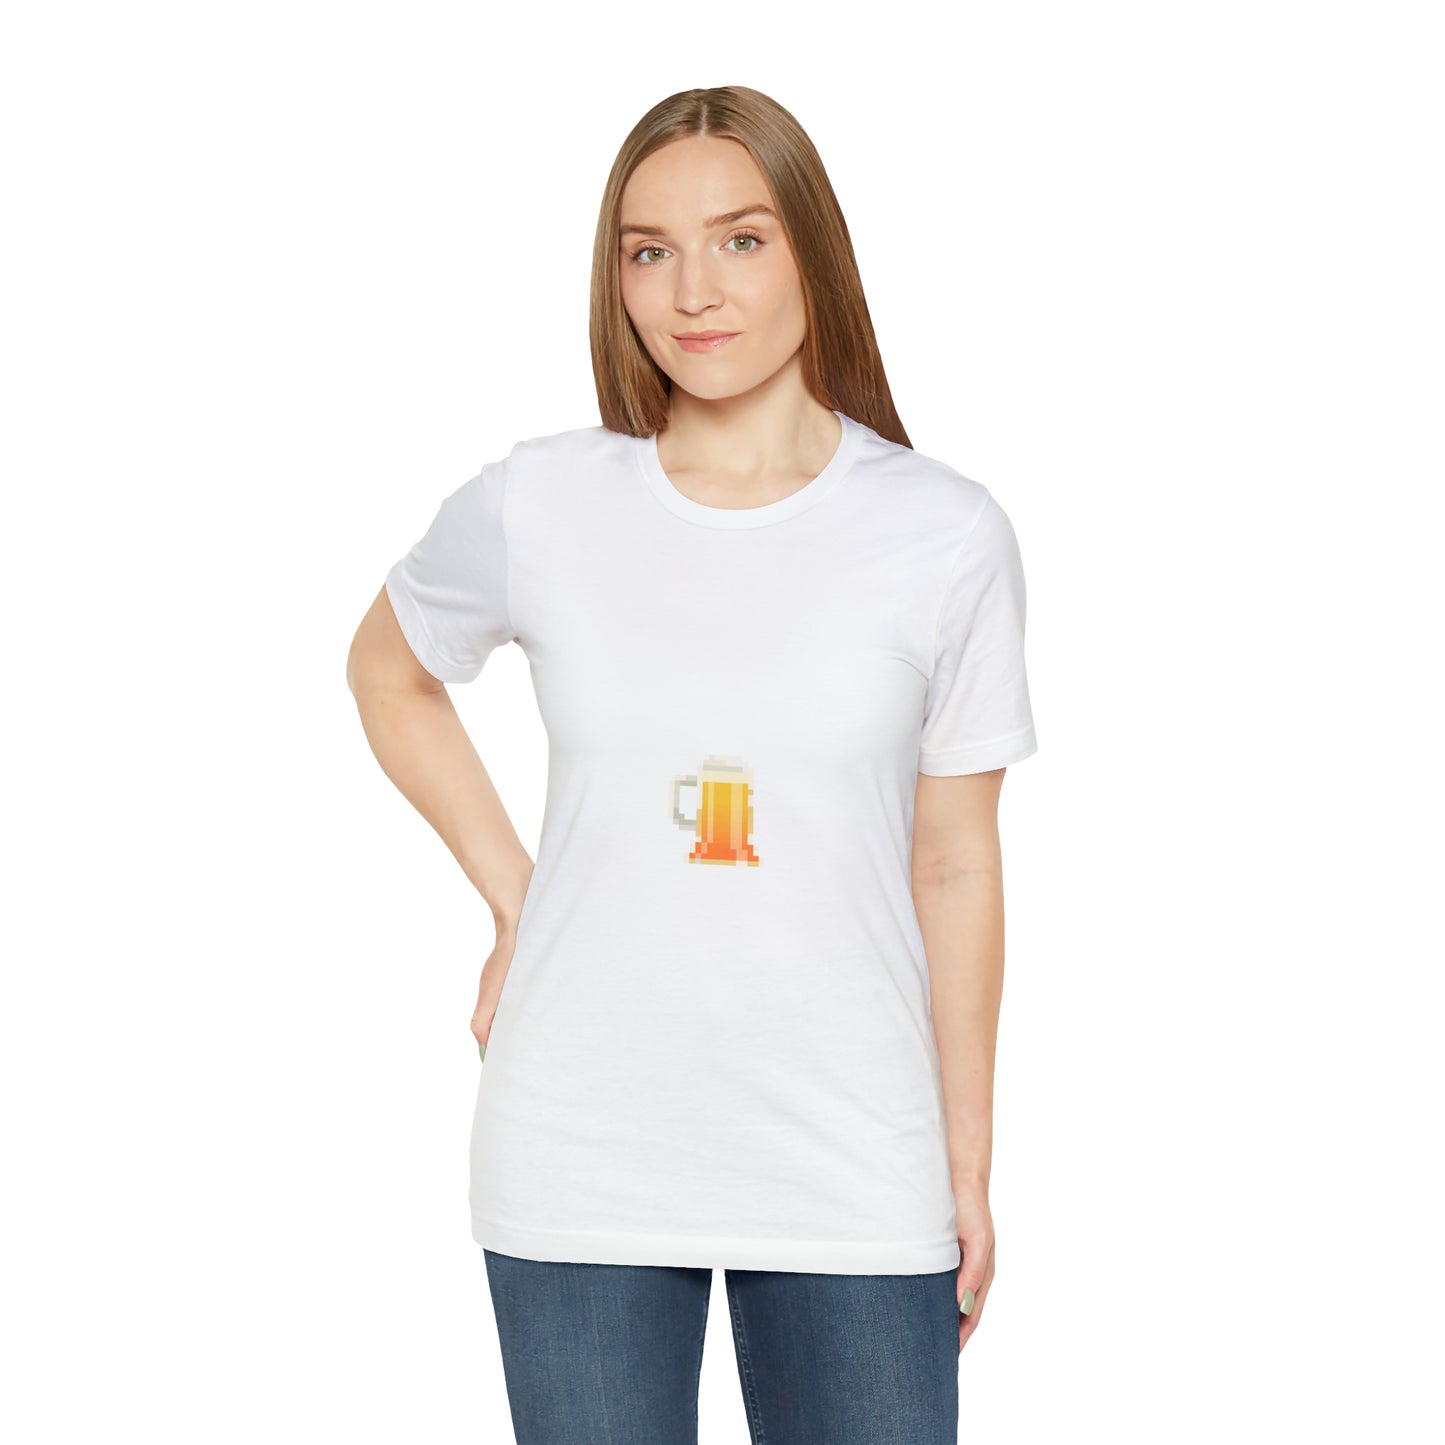 Life is Brew-tiful (8-bit) - Beer T-Shirt